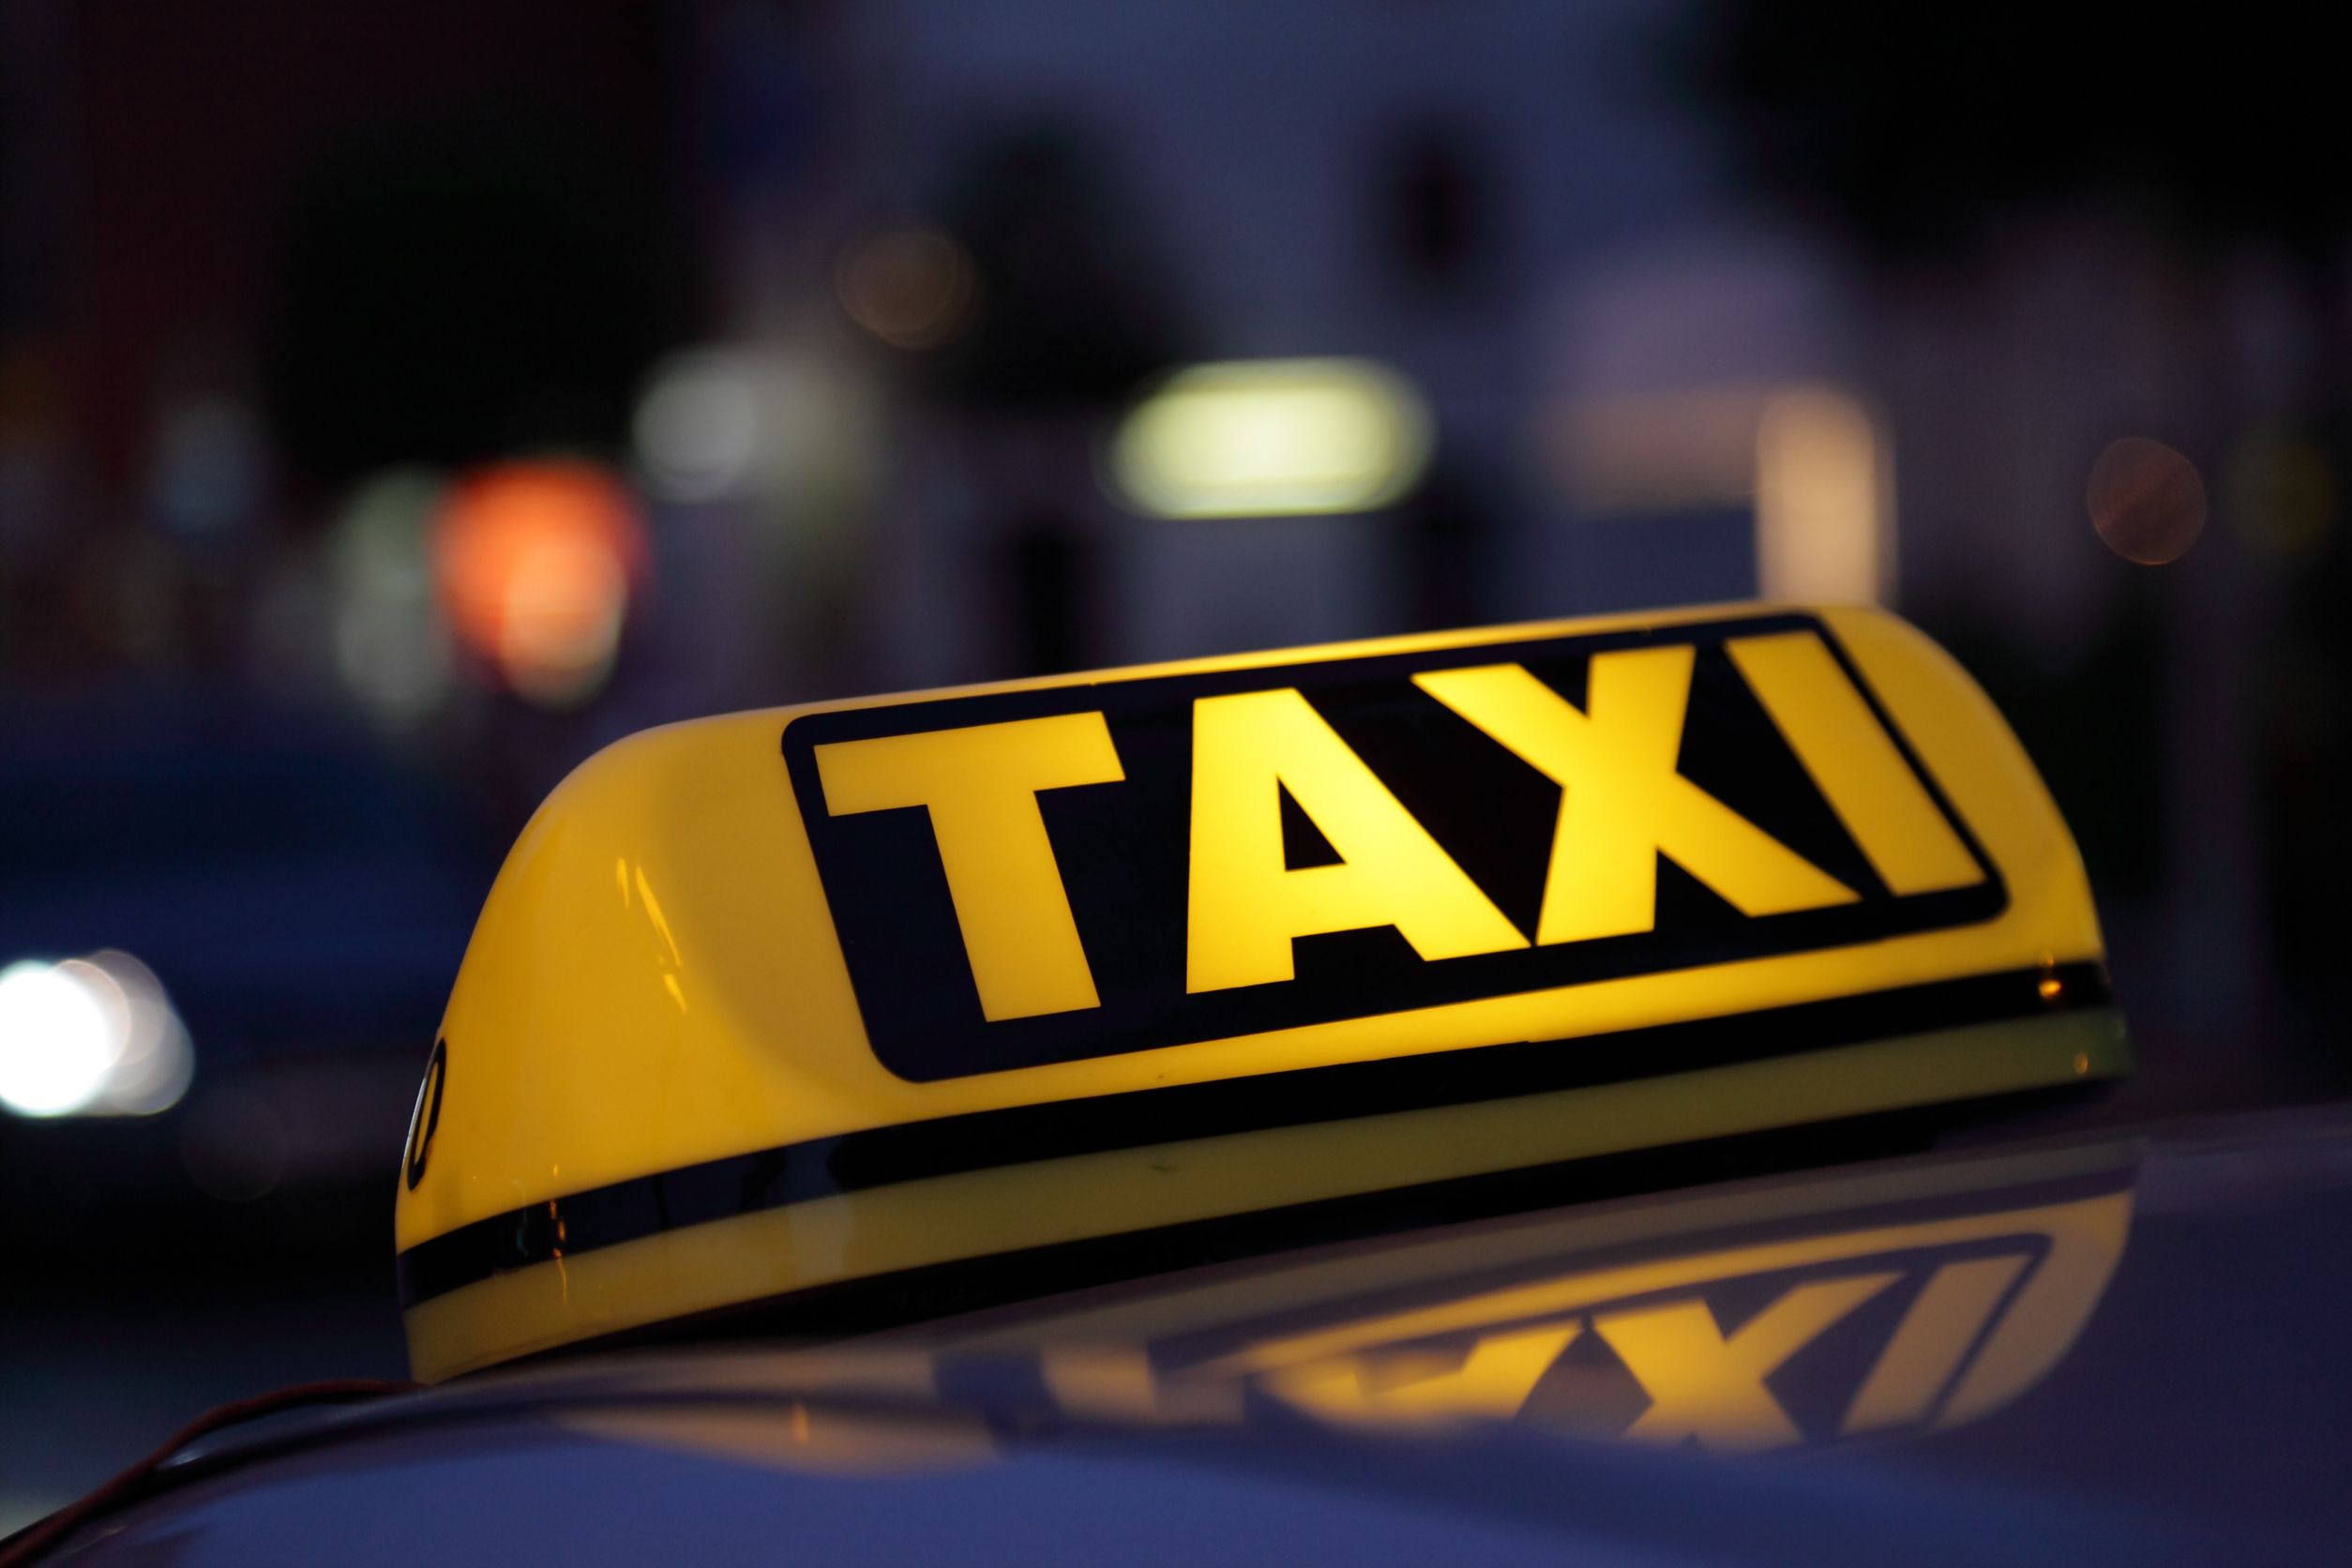 a cab, cab, taxi cab service, taxi cab, cab yellow cab, cab service ...